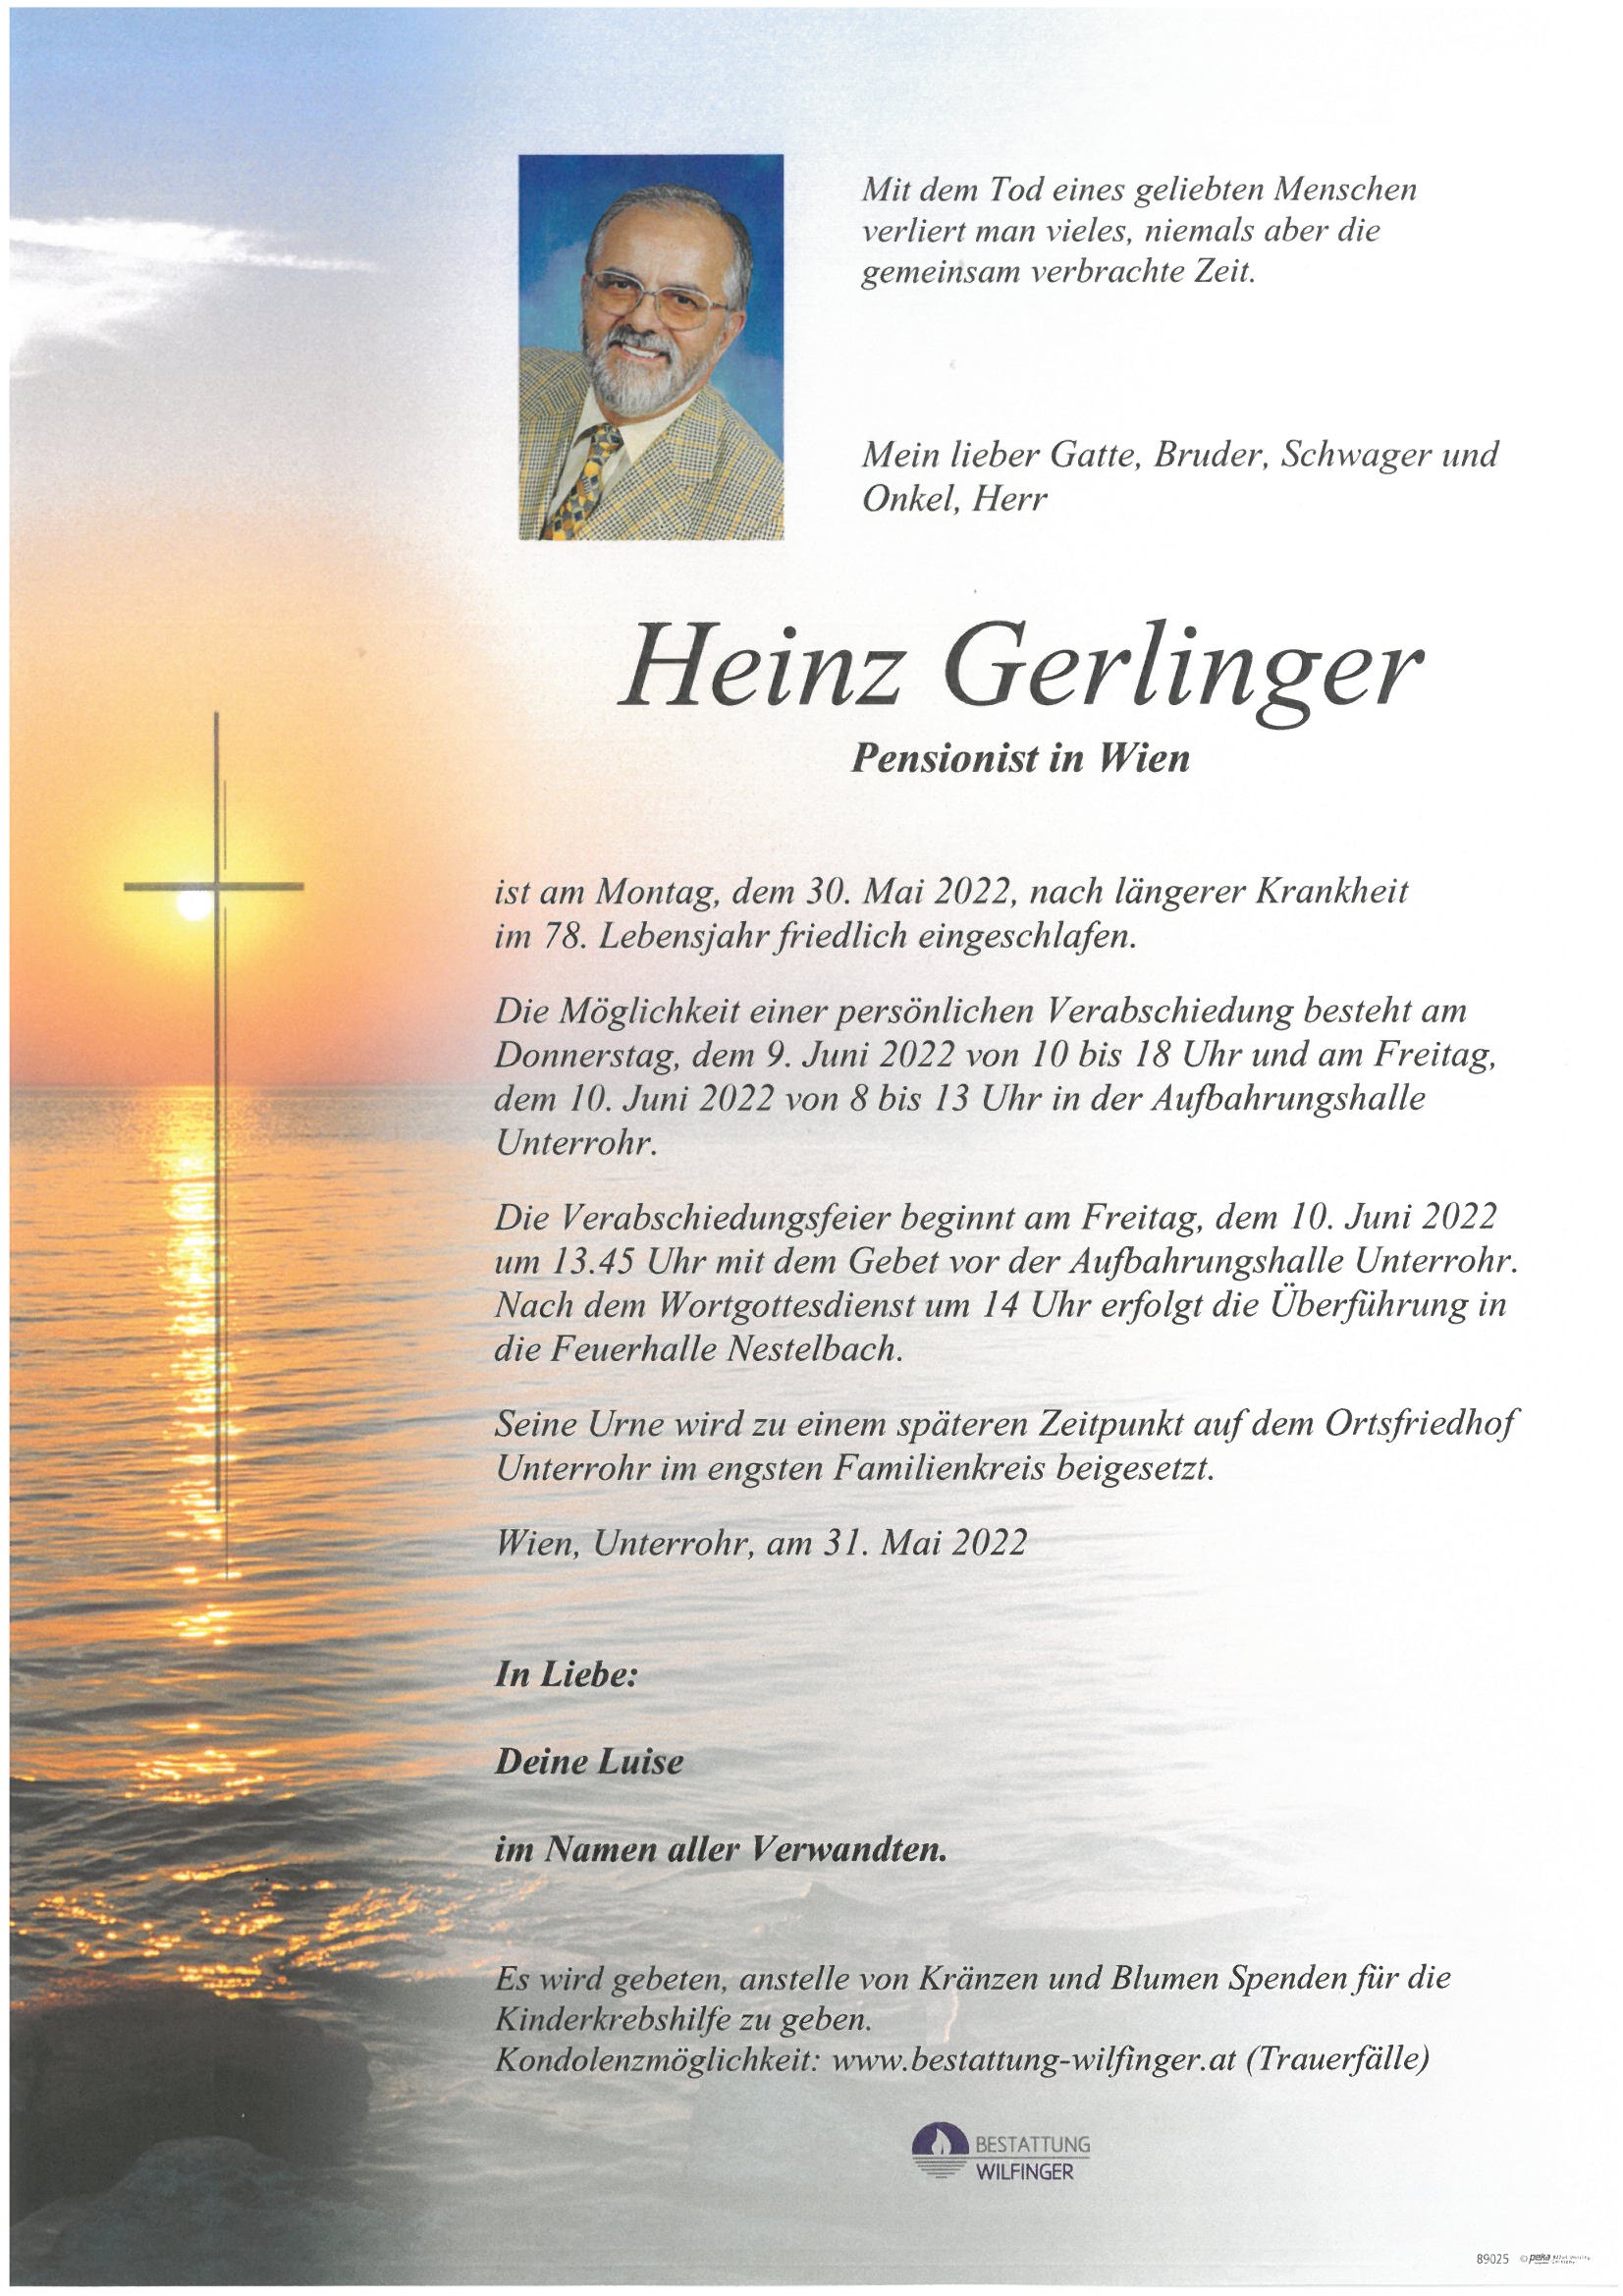 Gerlinger Heinz, Wien-Unterrohr